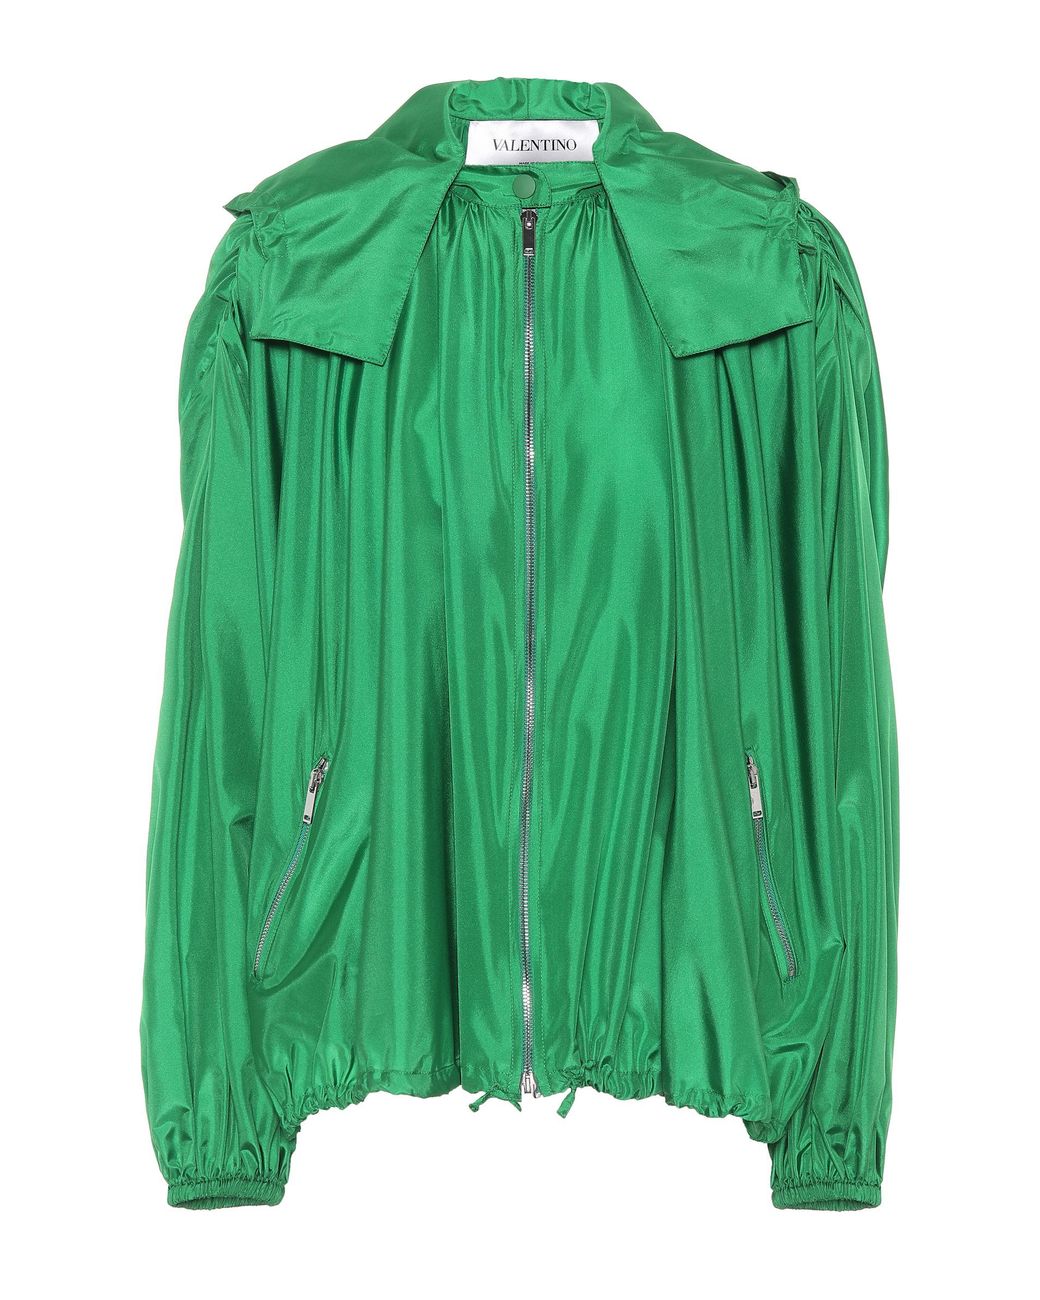 Valentino Silk Hooded Jacket in Green - Lyst